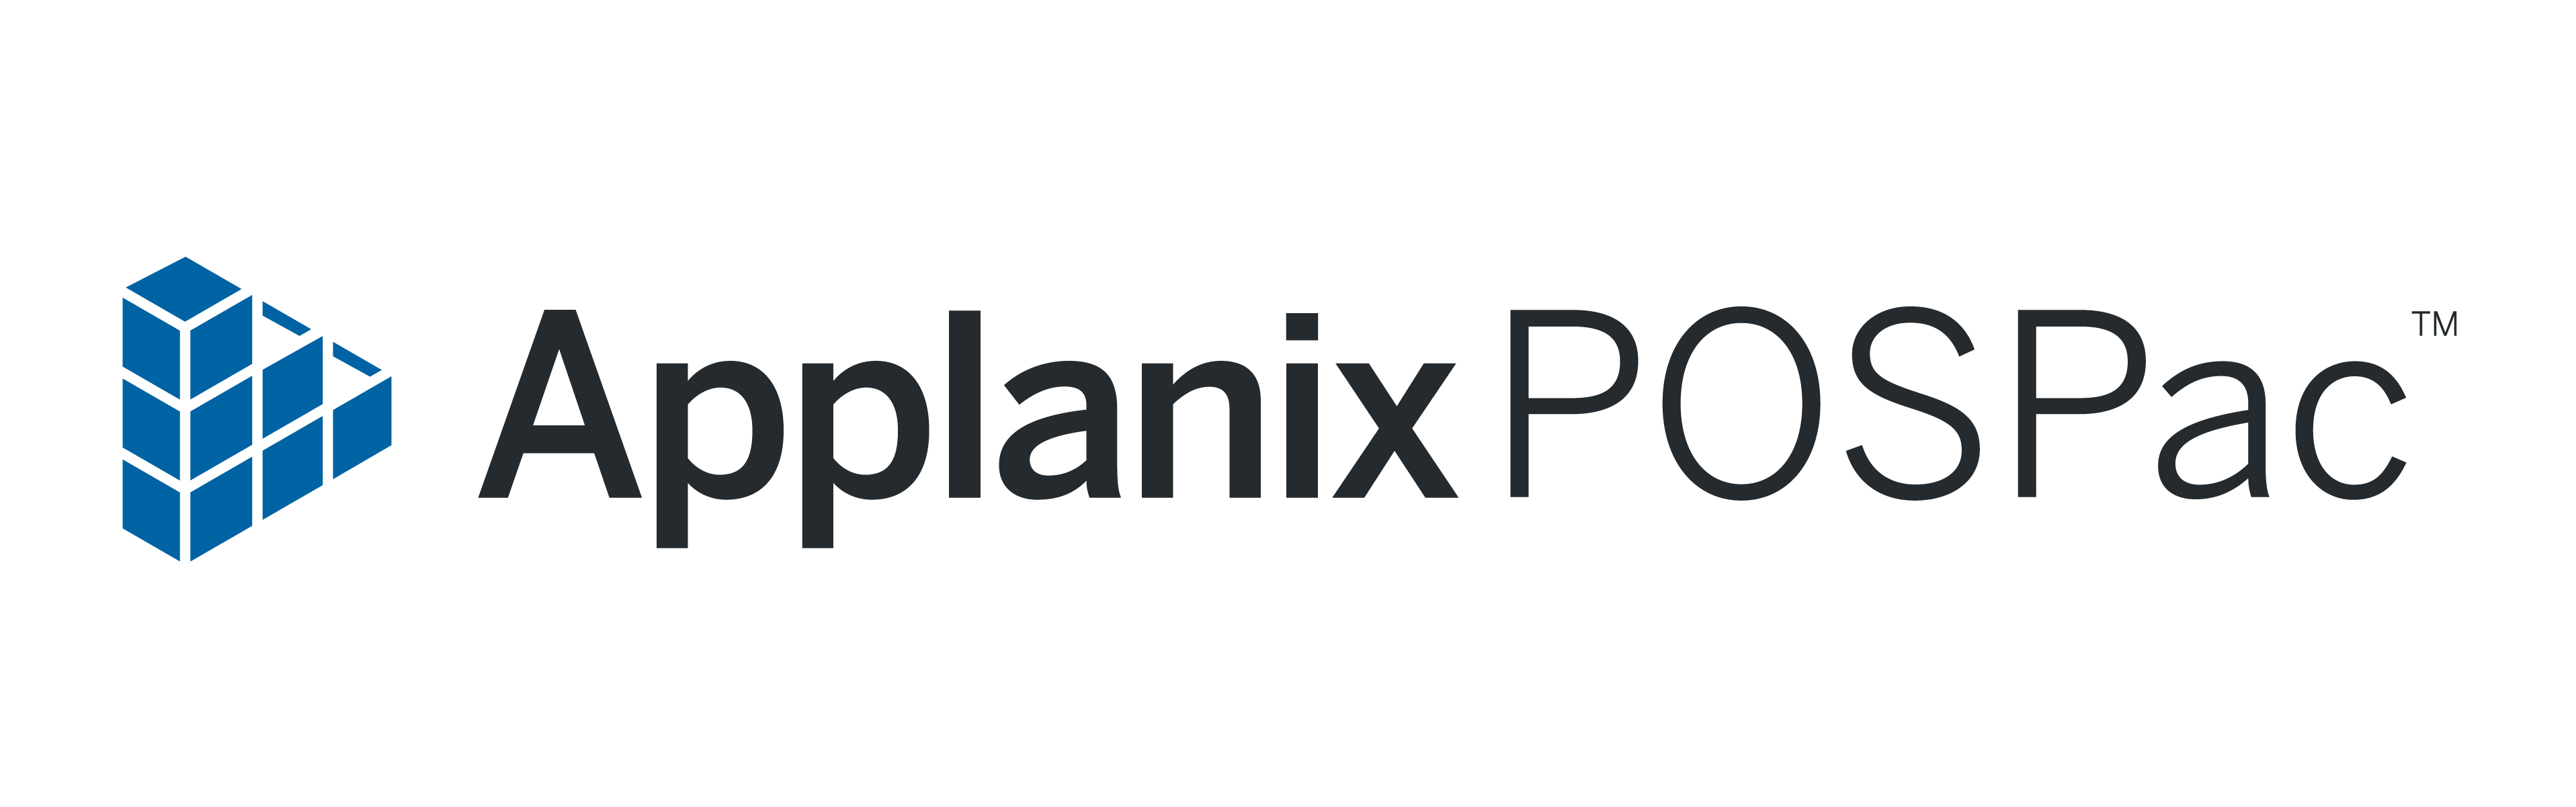 Applanix POSPac Logo